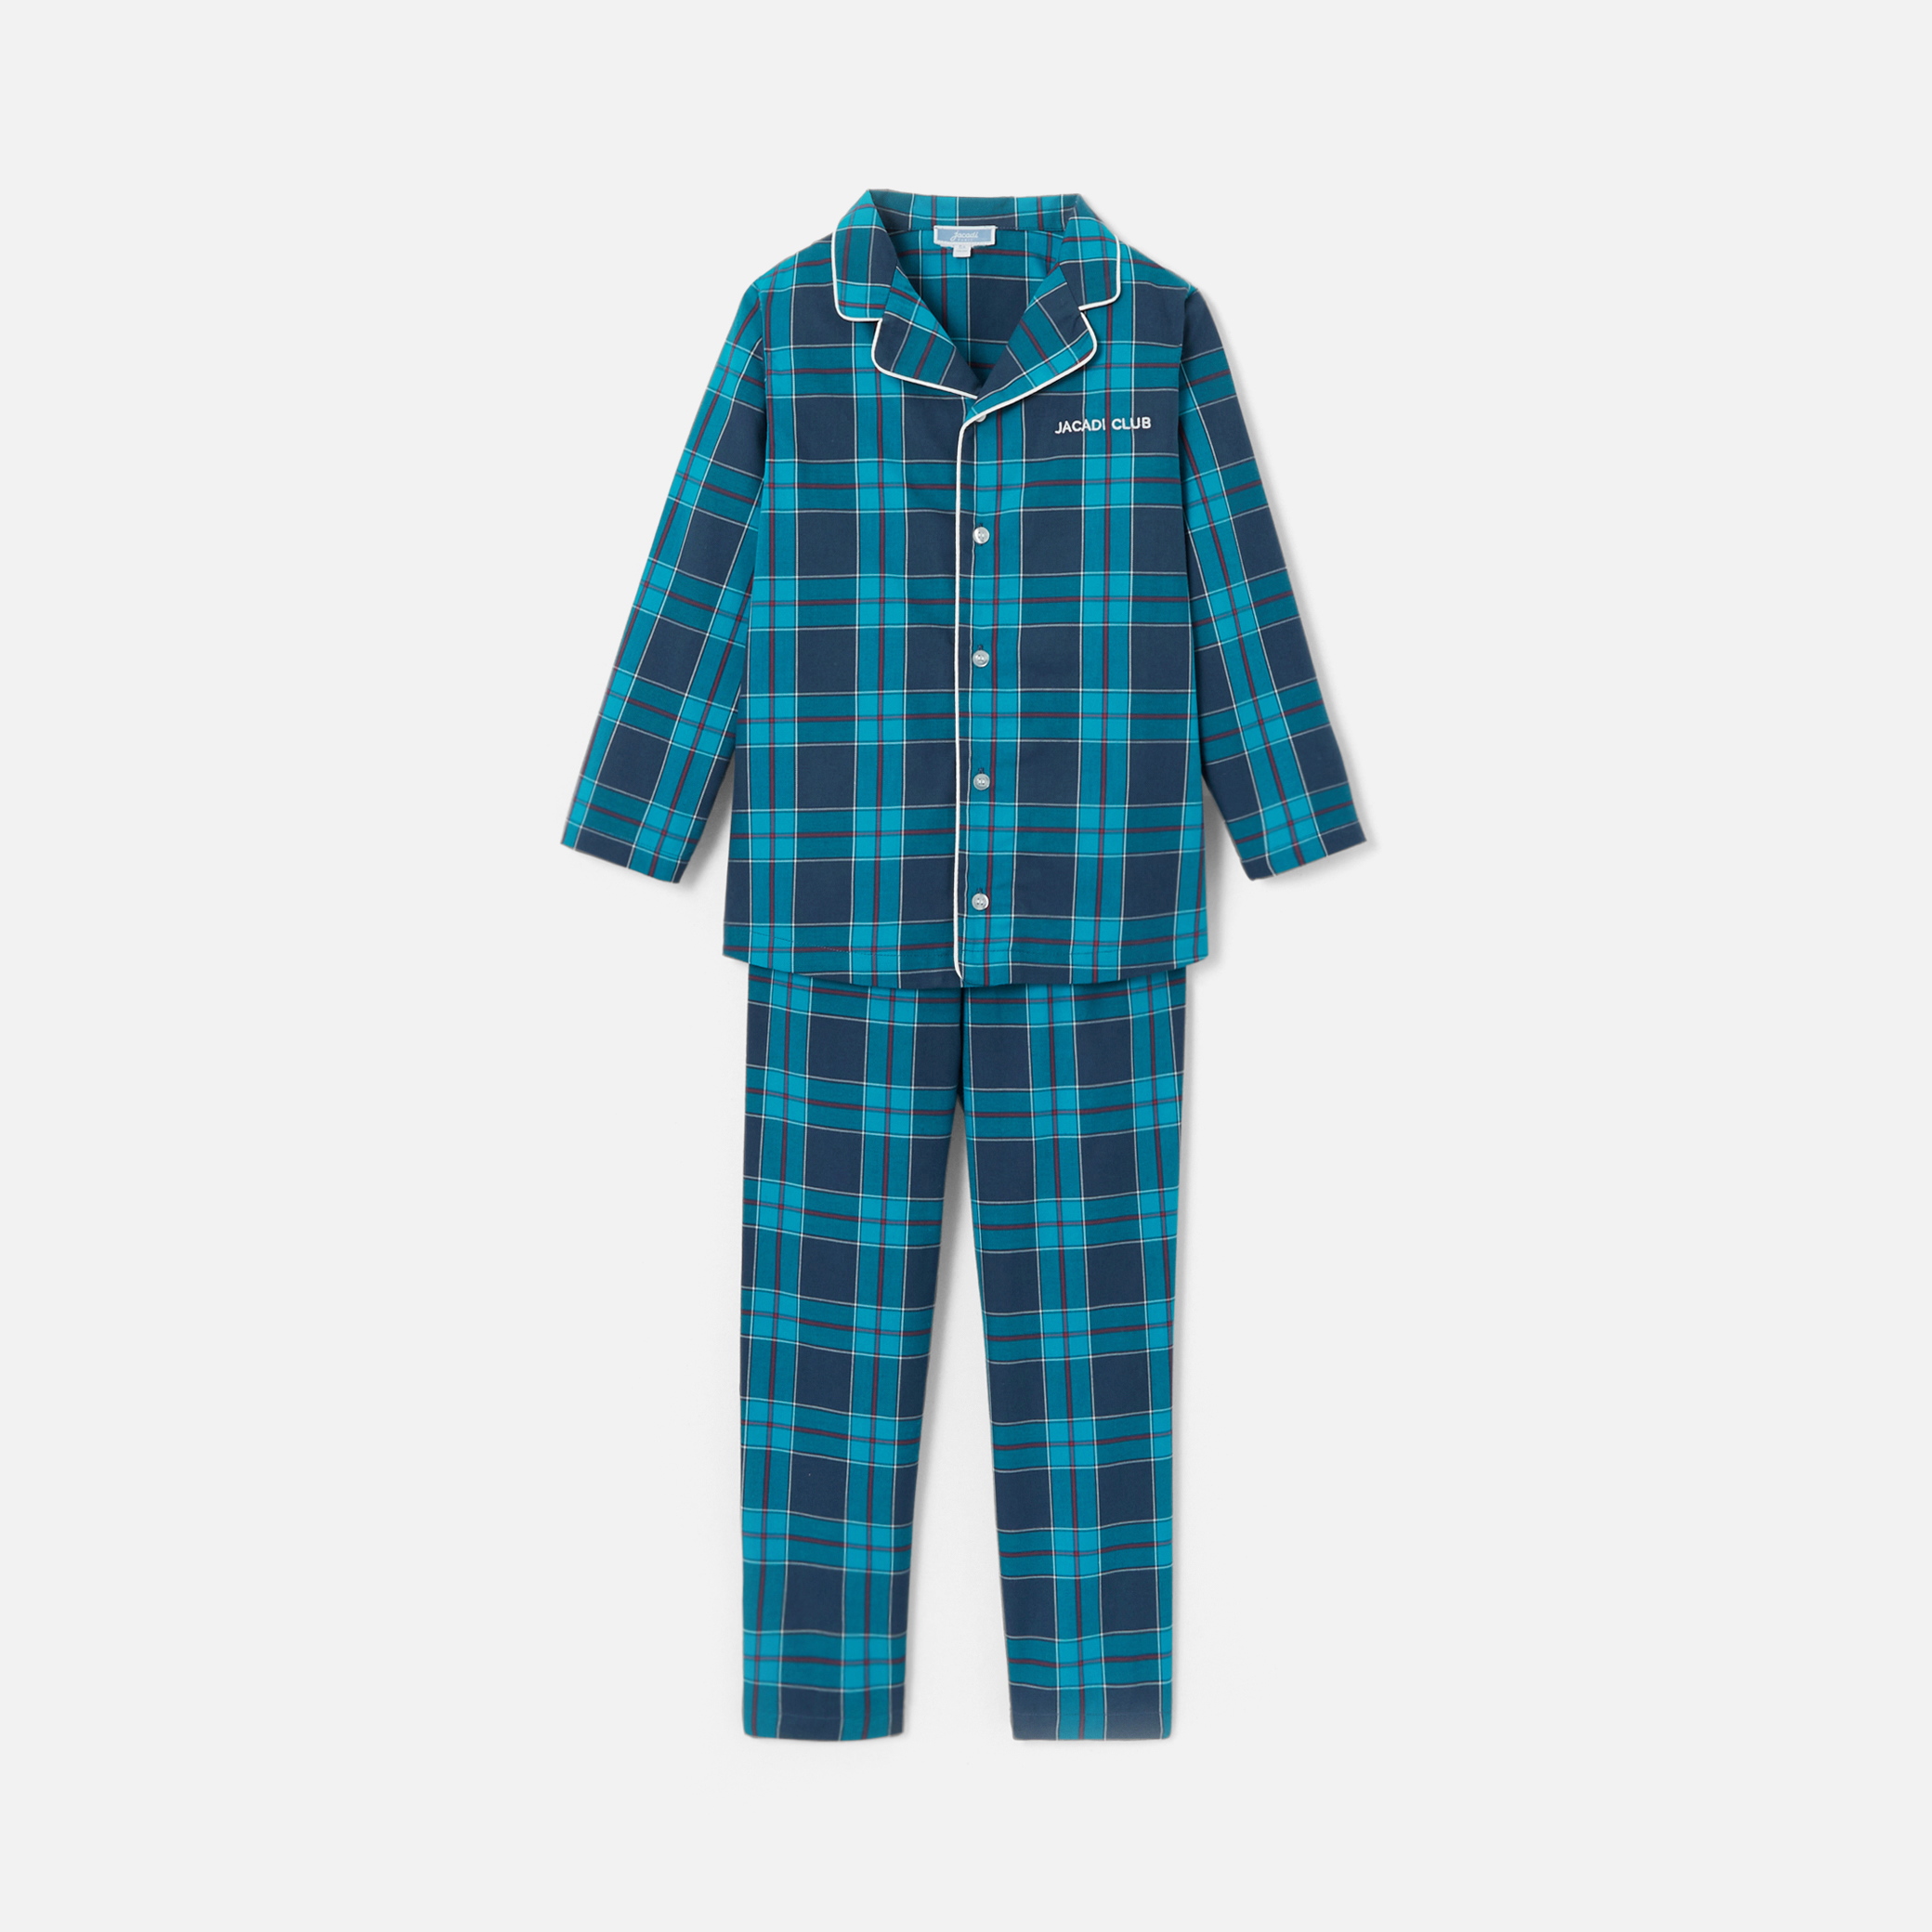 Boy flannel pajamas